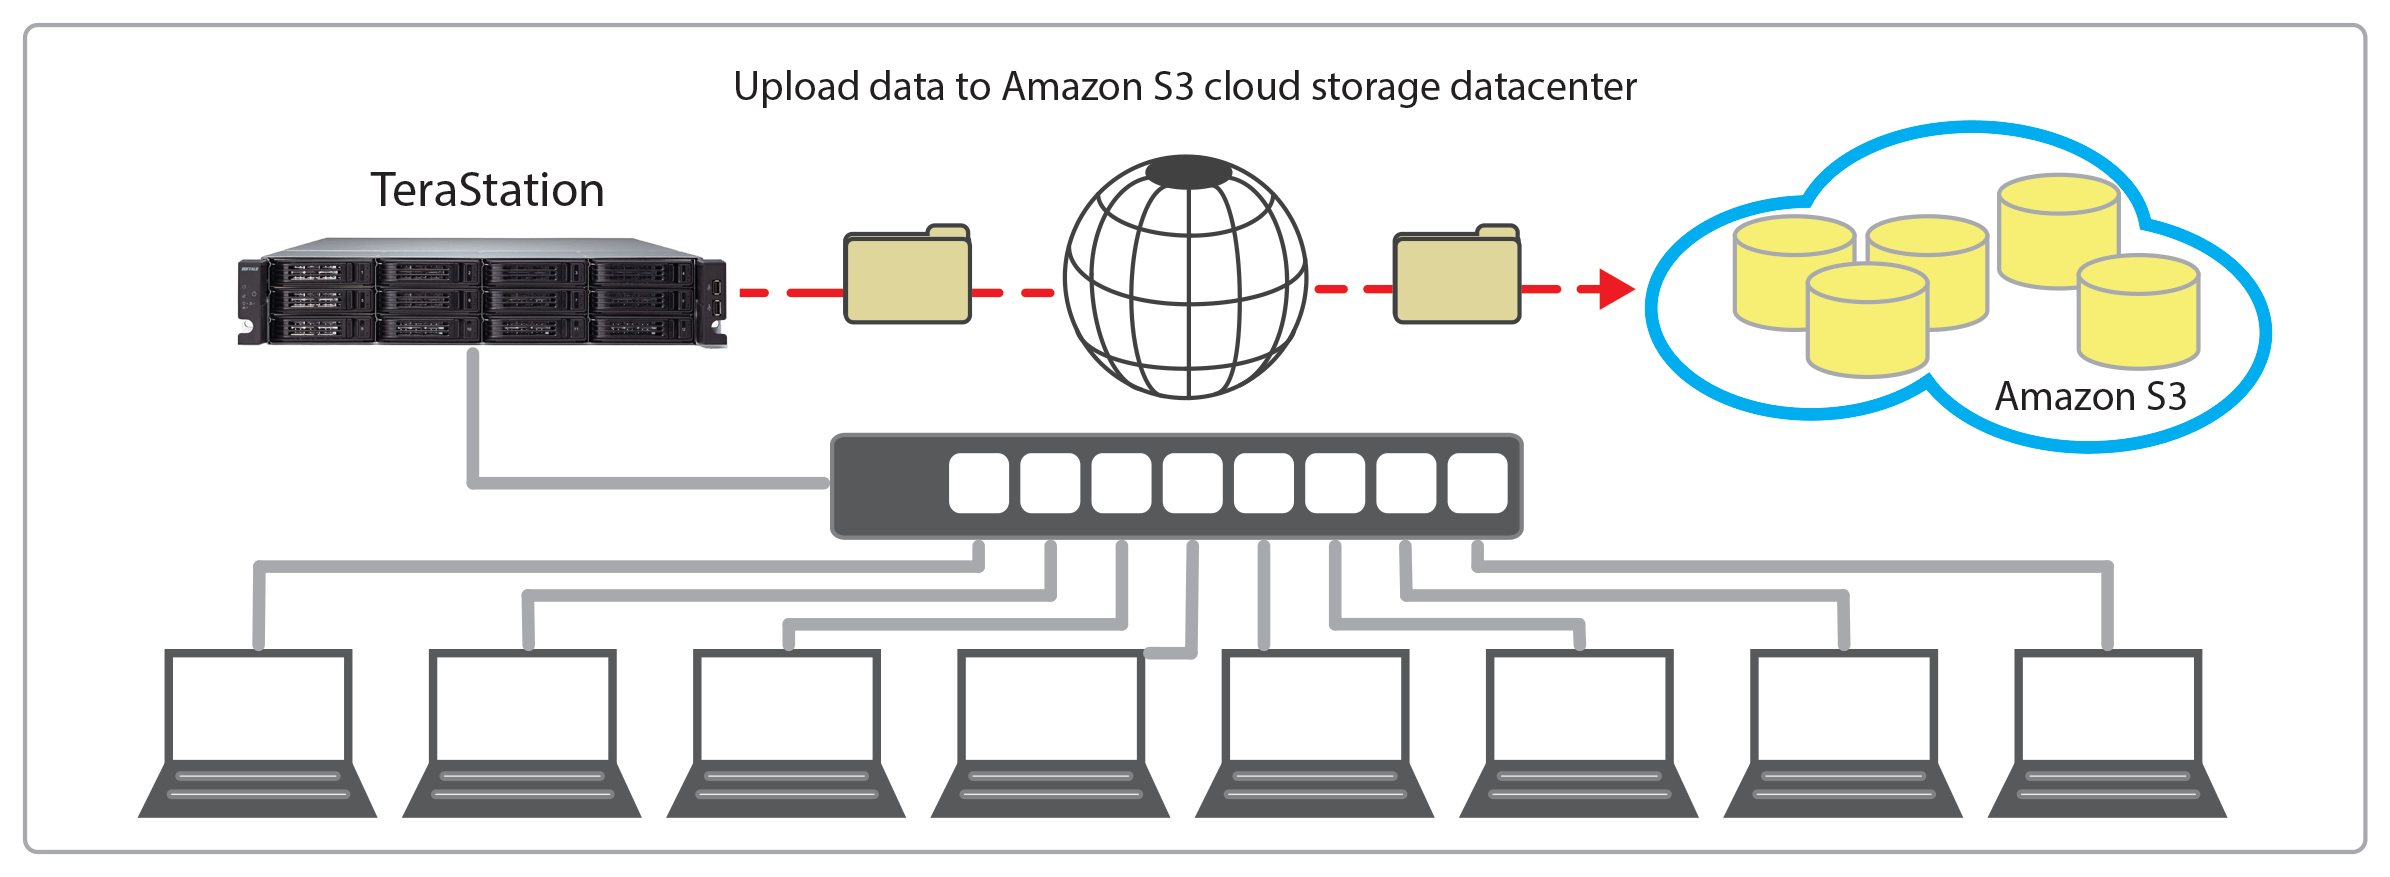 terastation 7000 cloud storage backup